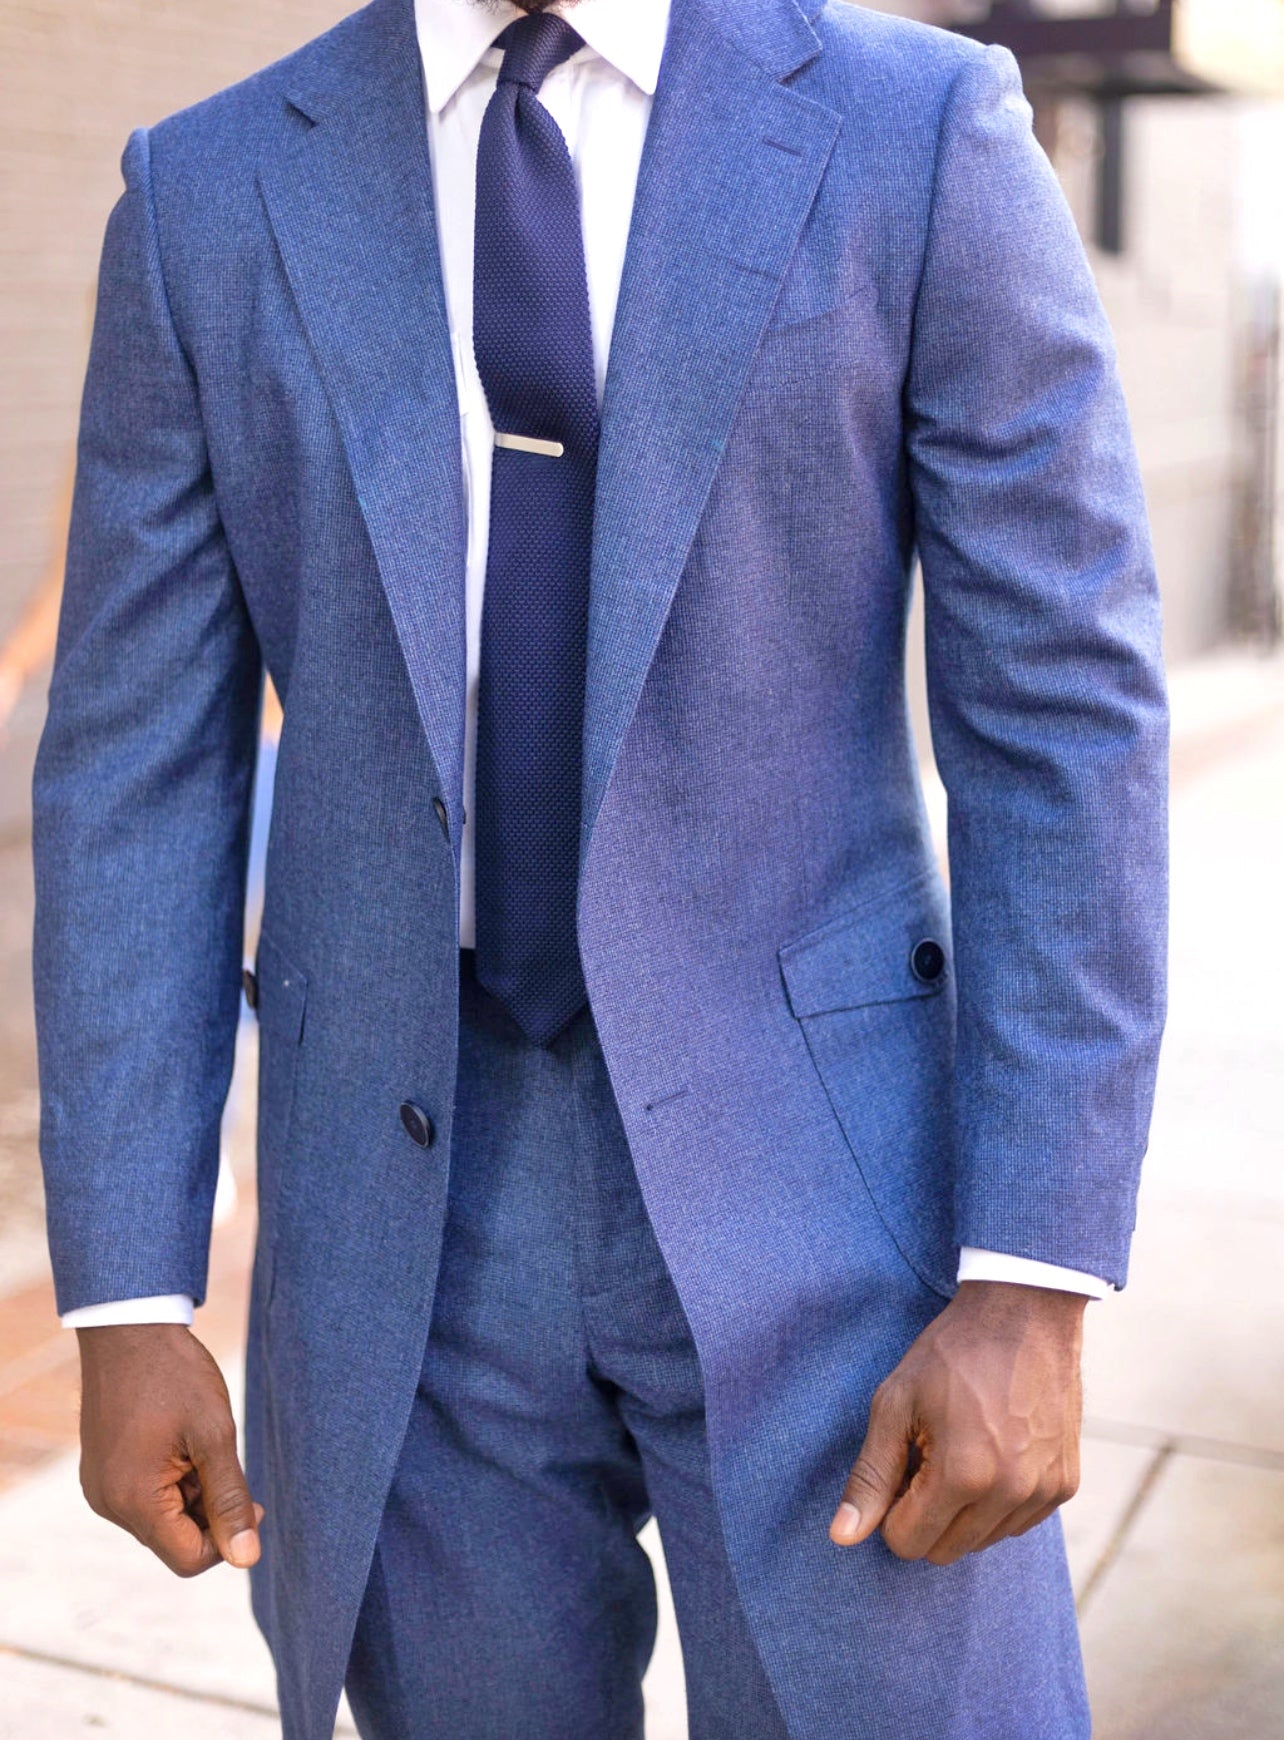 Bluë Herringbone Wool 3/4 Single Breasted Notched Lapel Suit